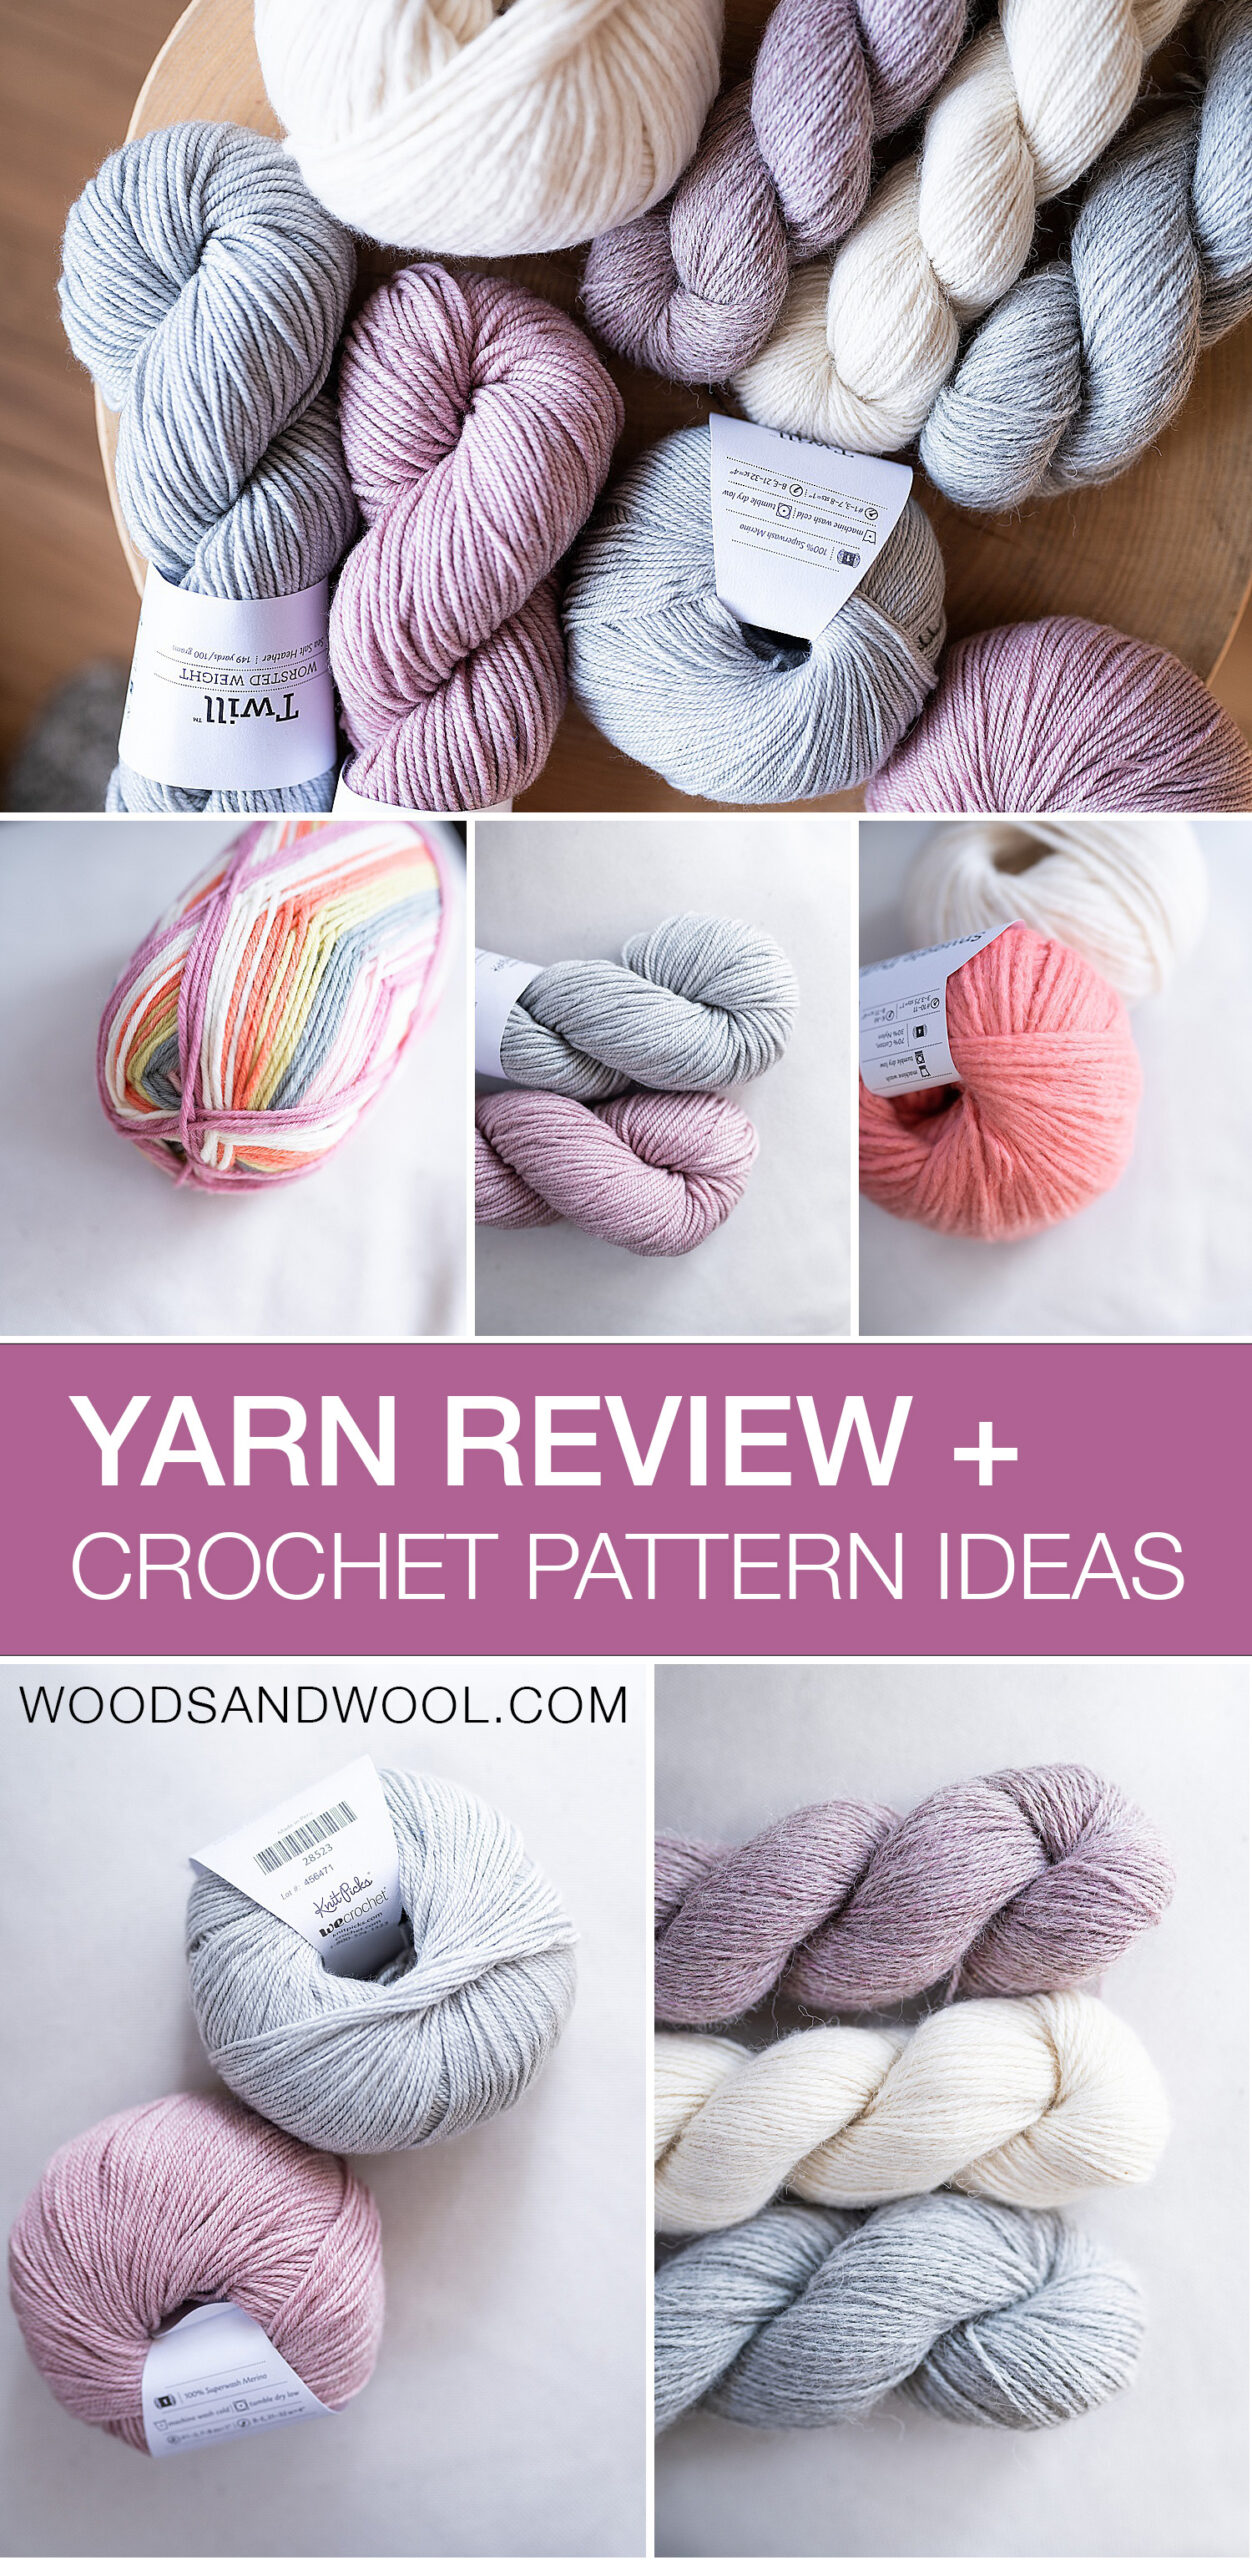 Amanda's Crochet Blanket Adventures : Drops Alpaca Review